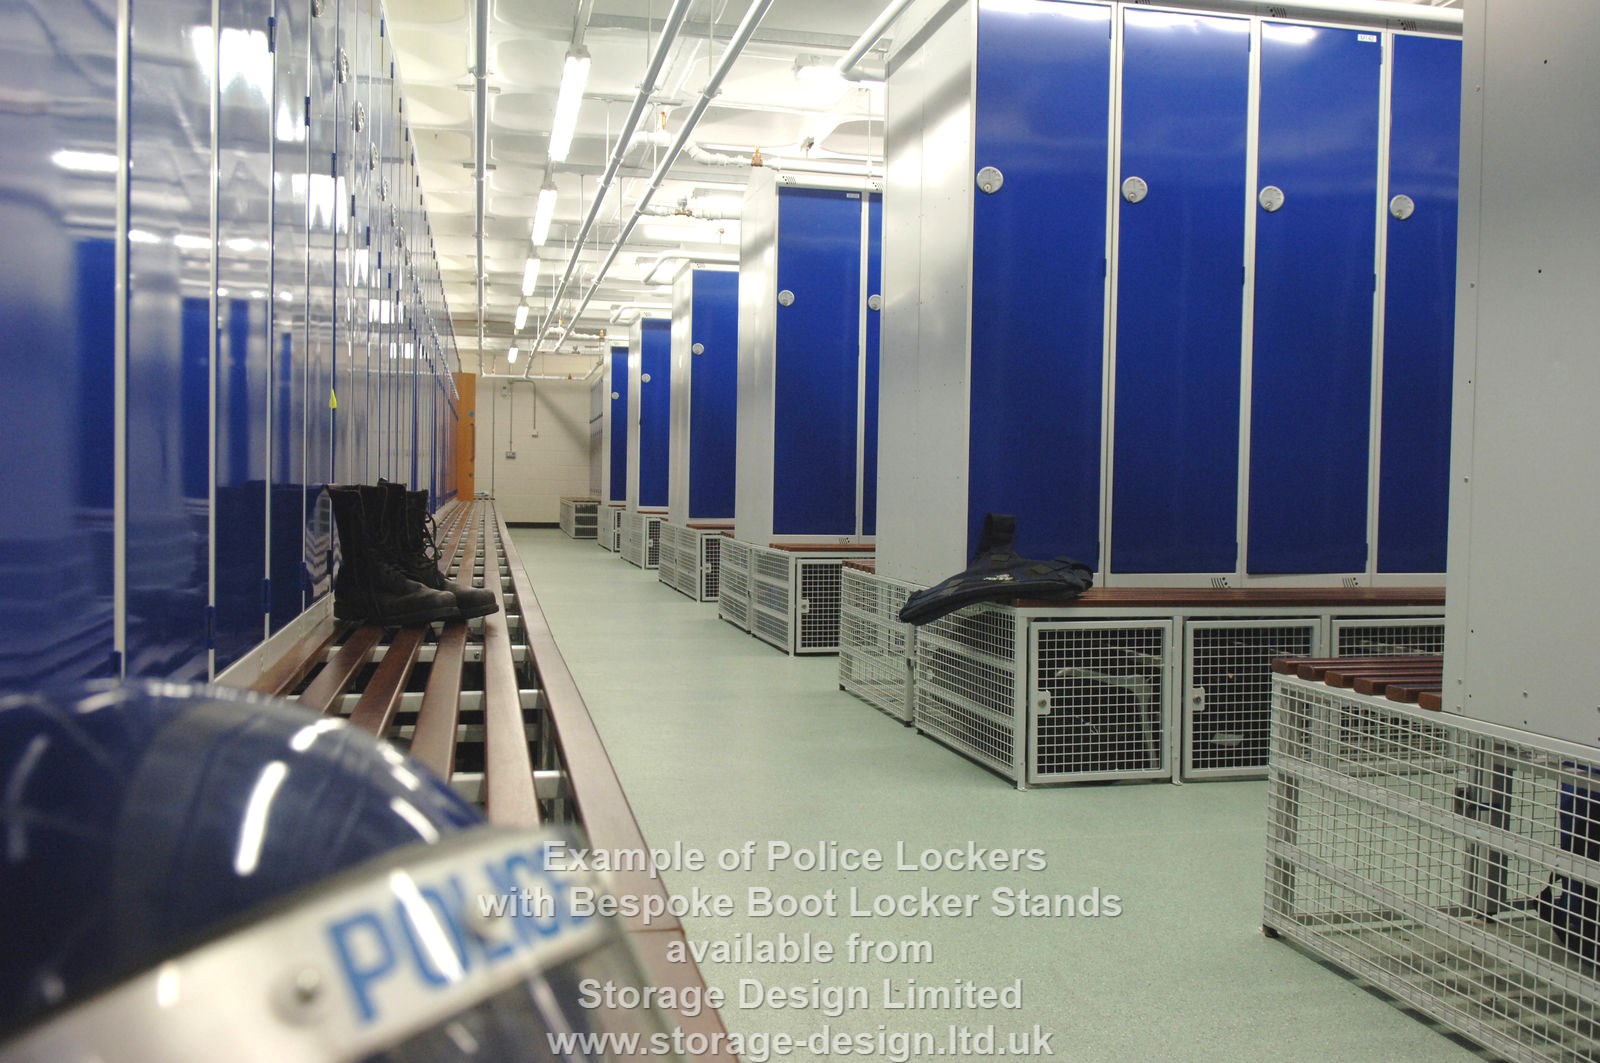 Police Lockers